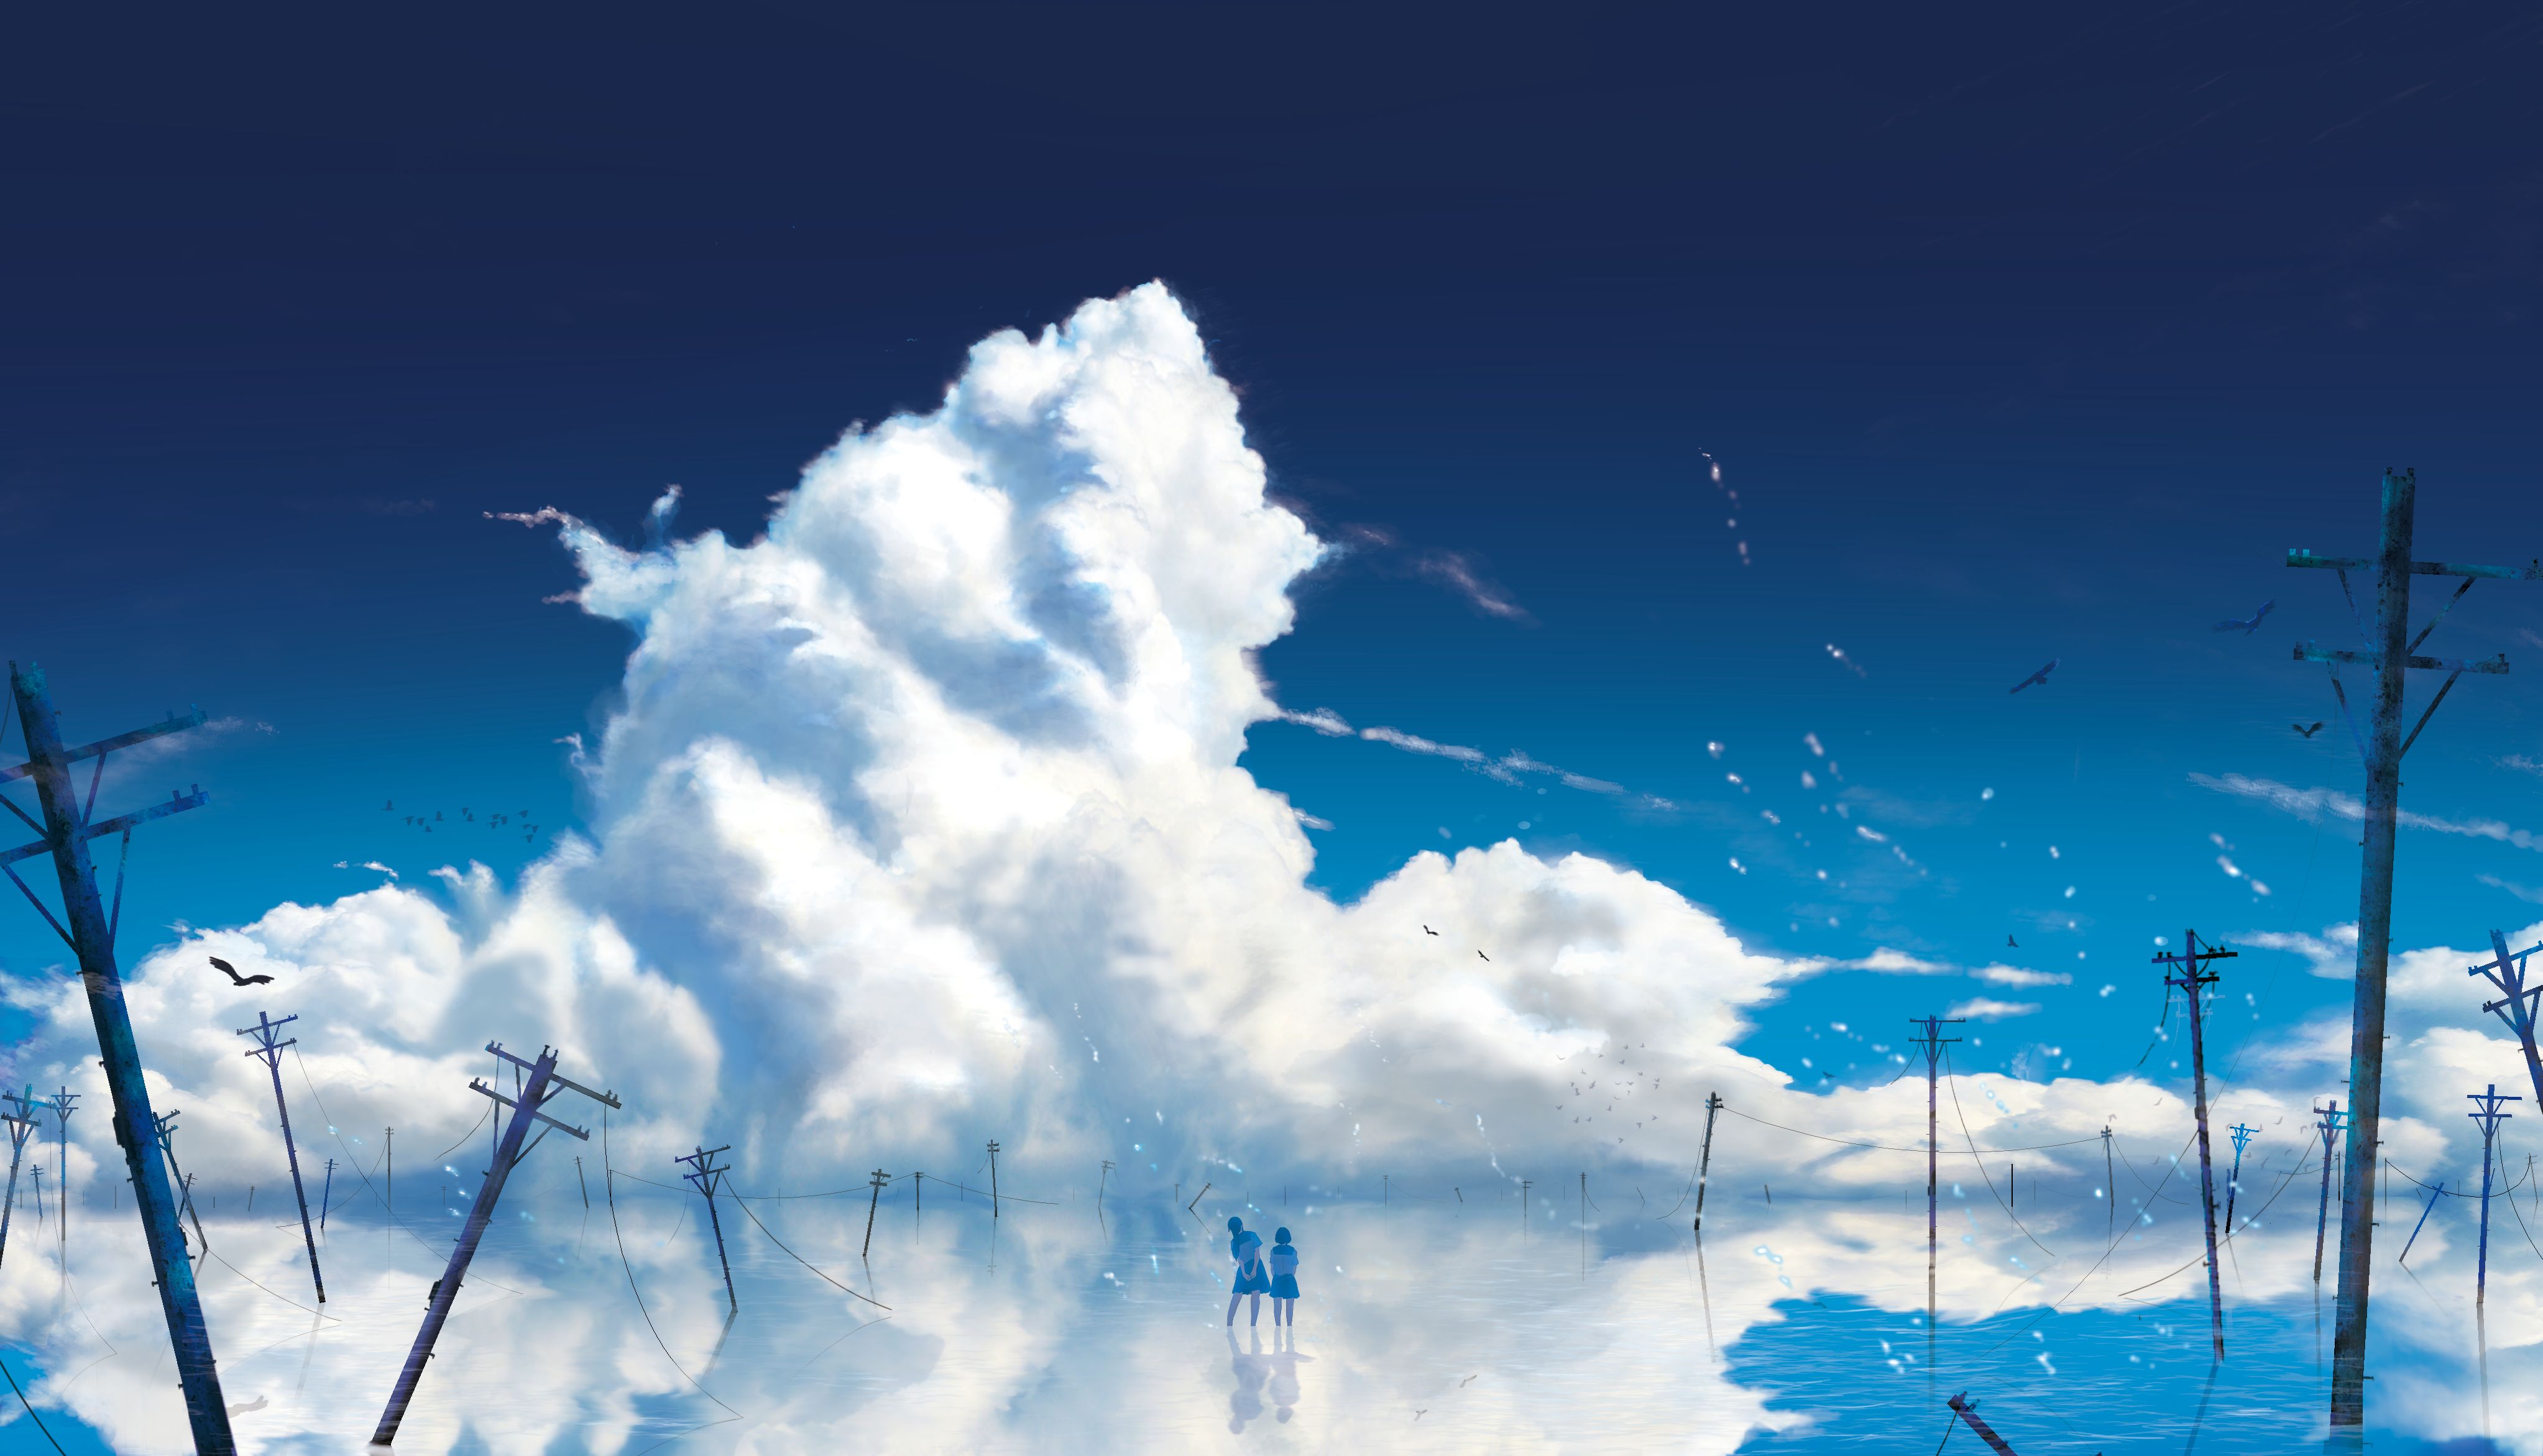 HD desktop wallpaper: Anime, Water, Sky, Reflection, Cloud, Skirt, Original, Telephone Pole download free picture